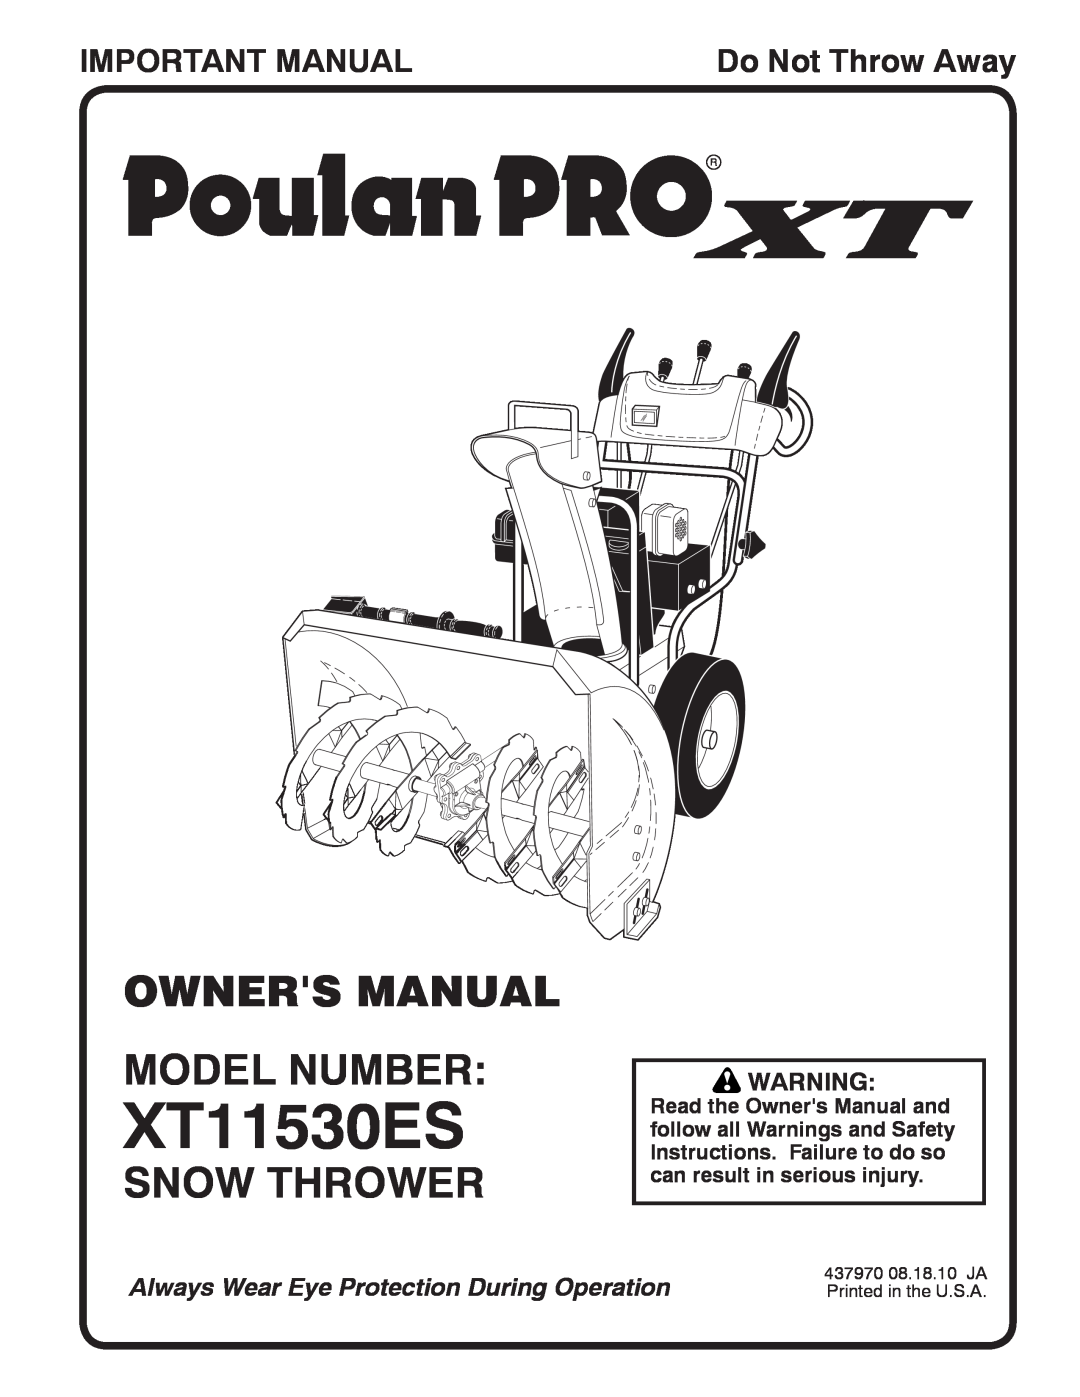 Poulan 96192003503, 437970 owner manual Snow Thrower, Important Manual, XT11530ES, Do Not Throw Away 